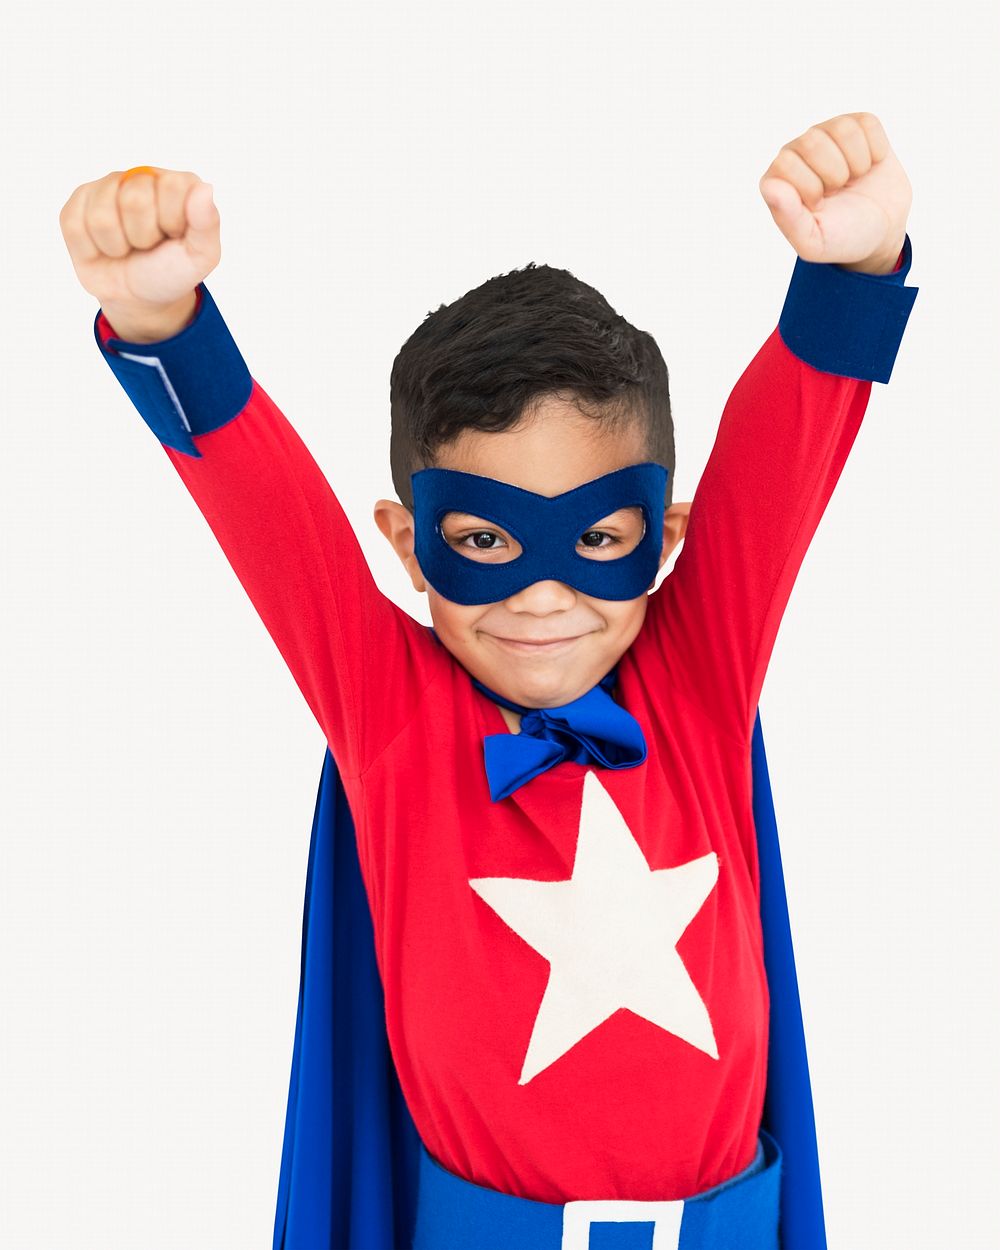 Superhero boy, kids education image